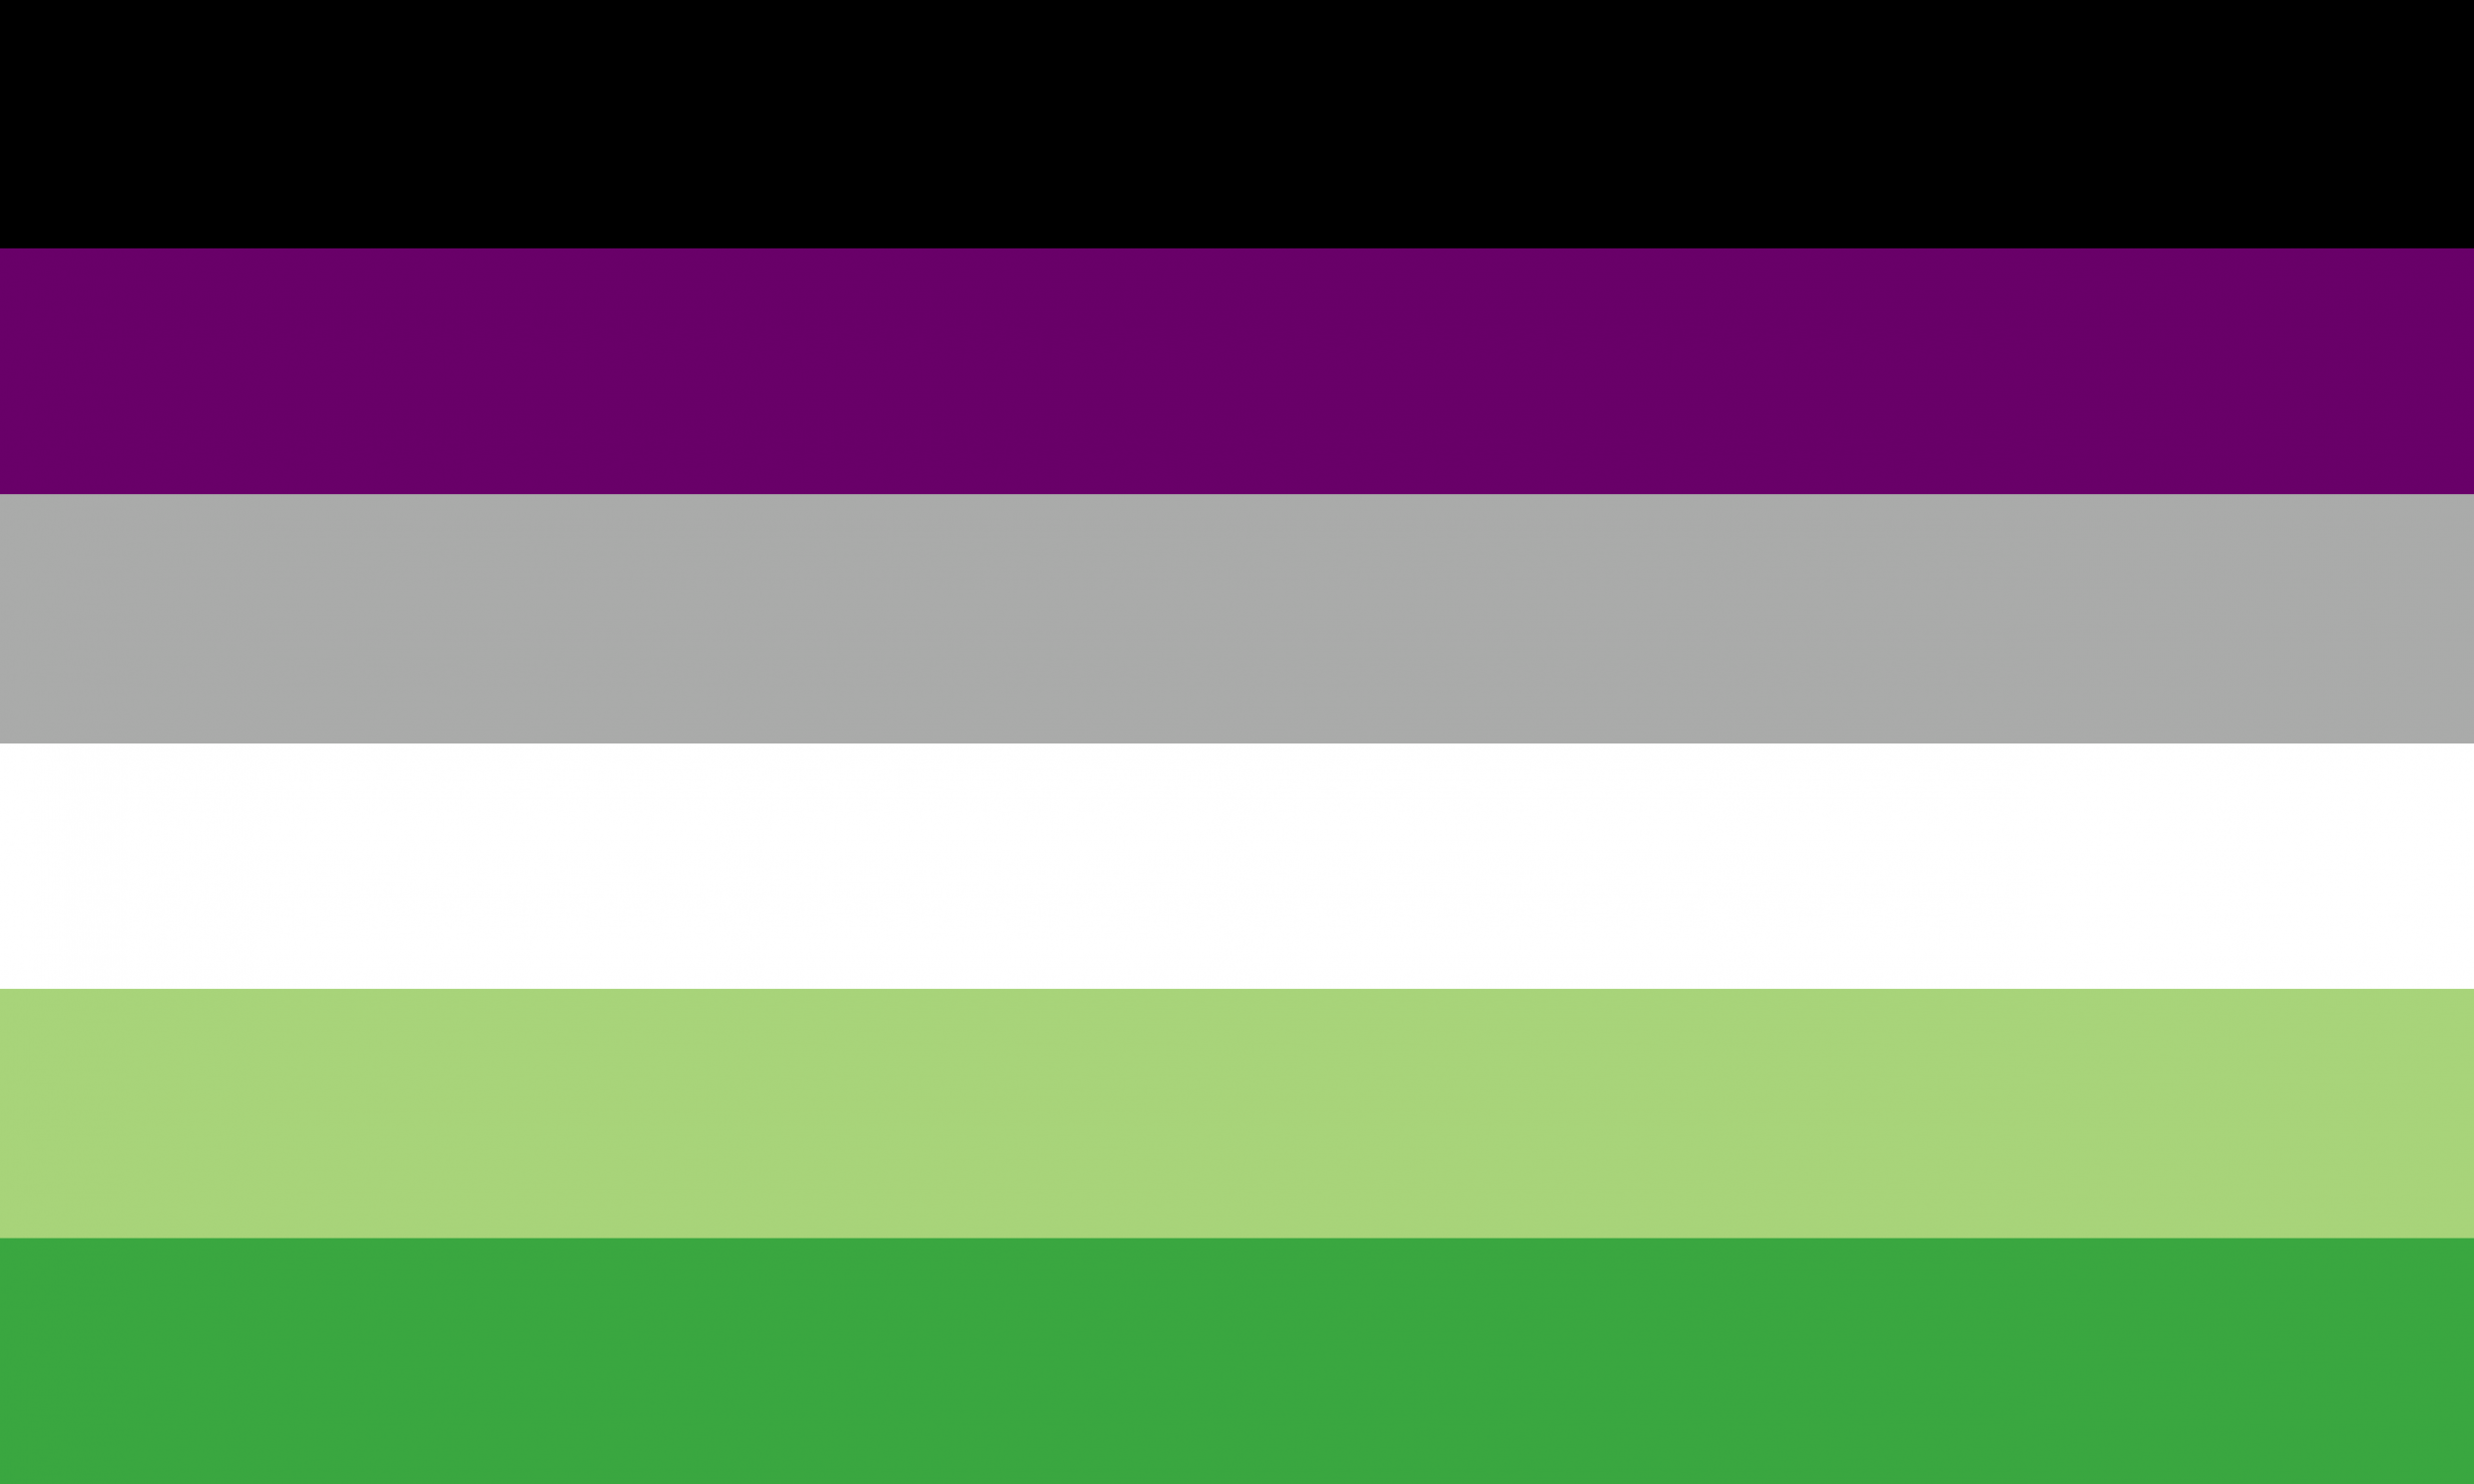 Aromantiv Asexuak Flag Blank Meme Template